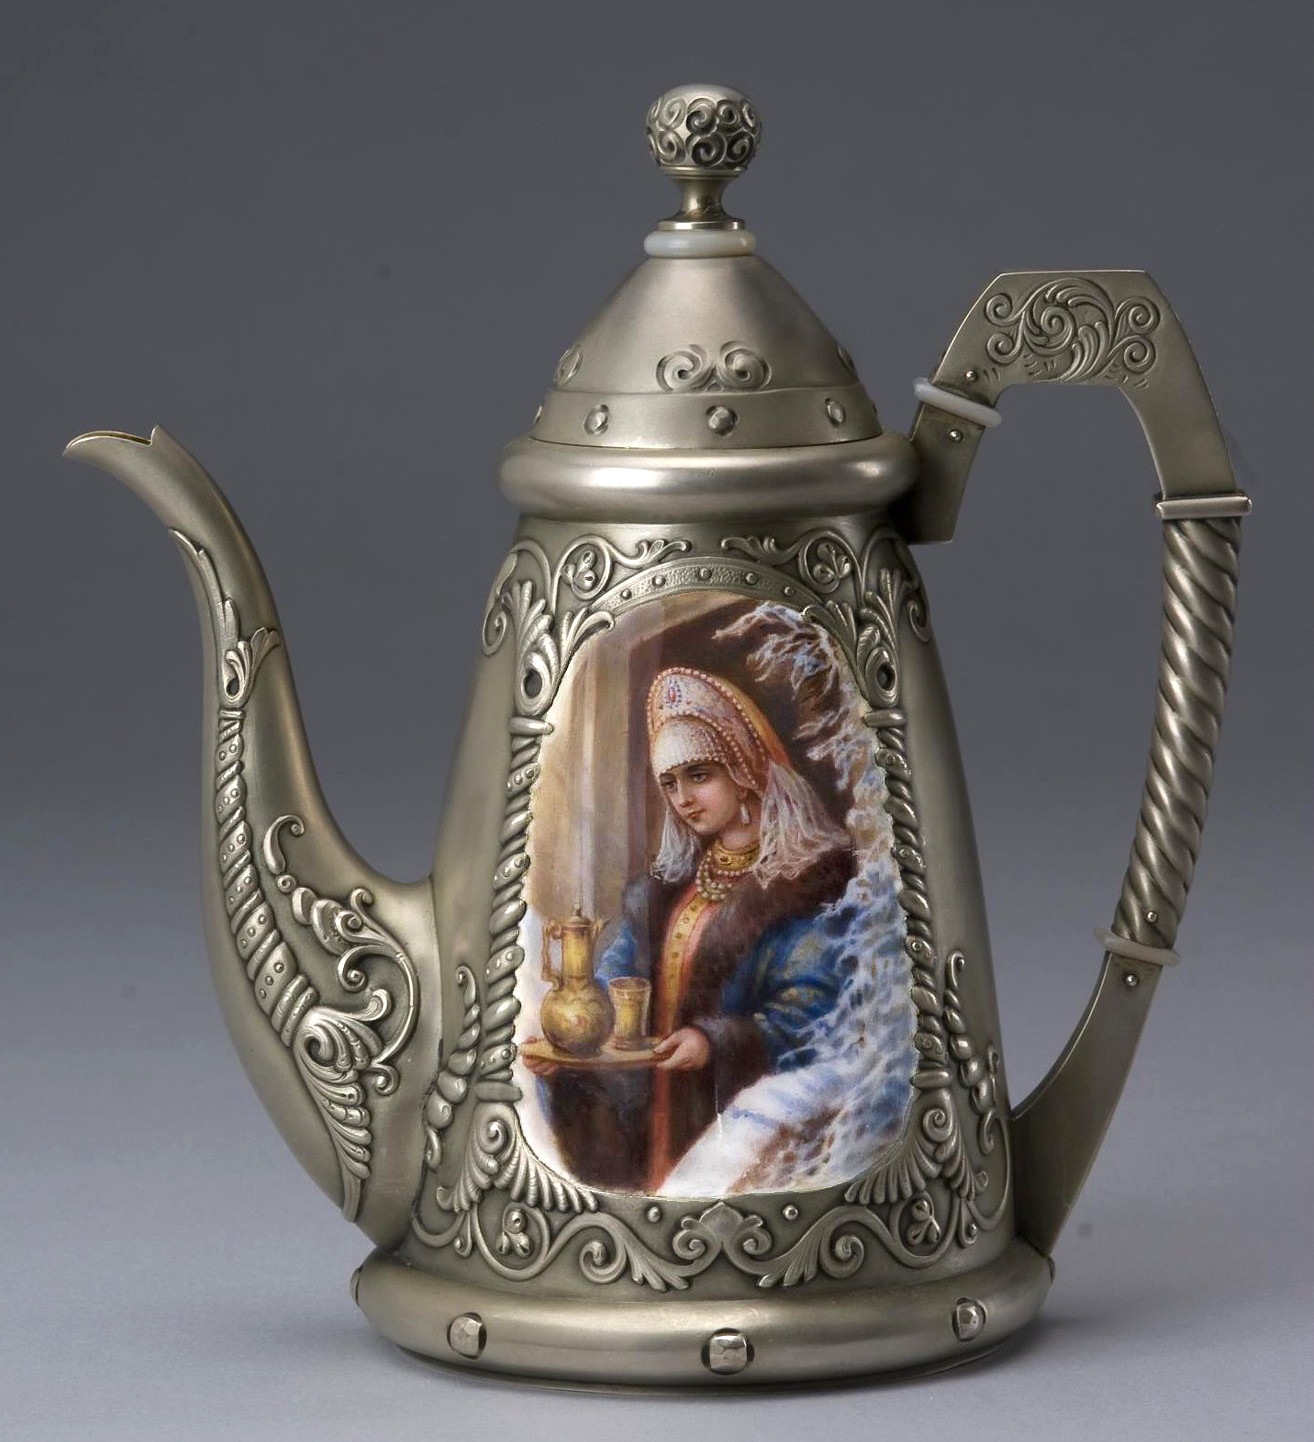 Russian Silver Enamel coffee pot by Kurlyukov with en plein miniature depicting a young woman in traditional dress